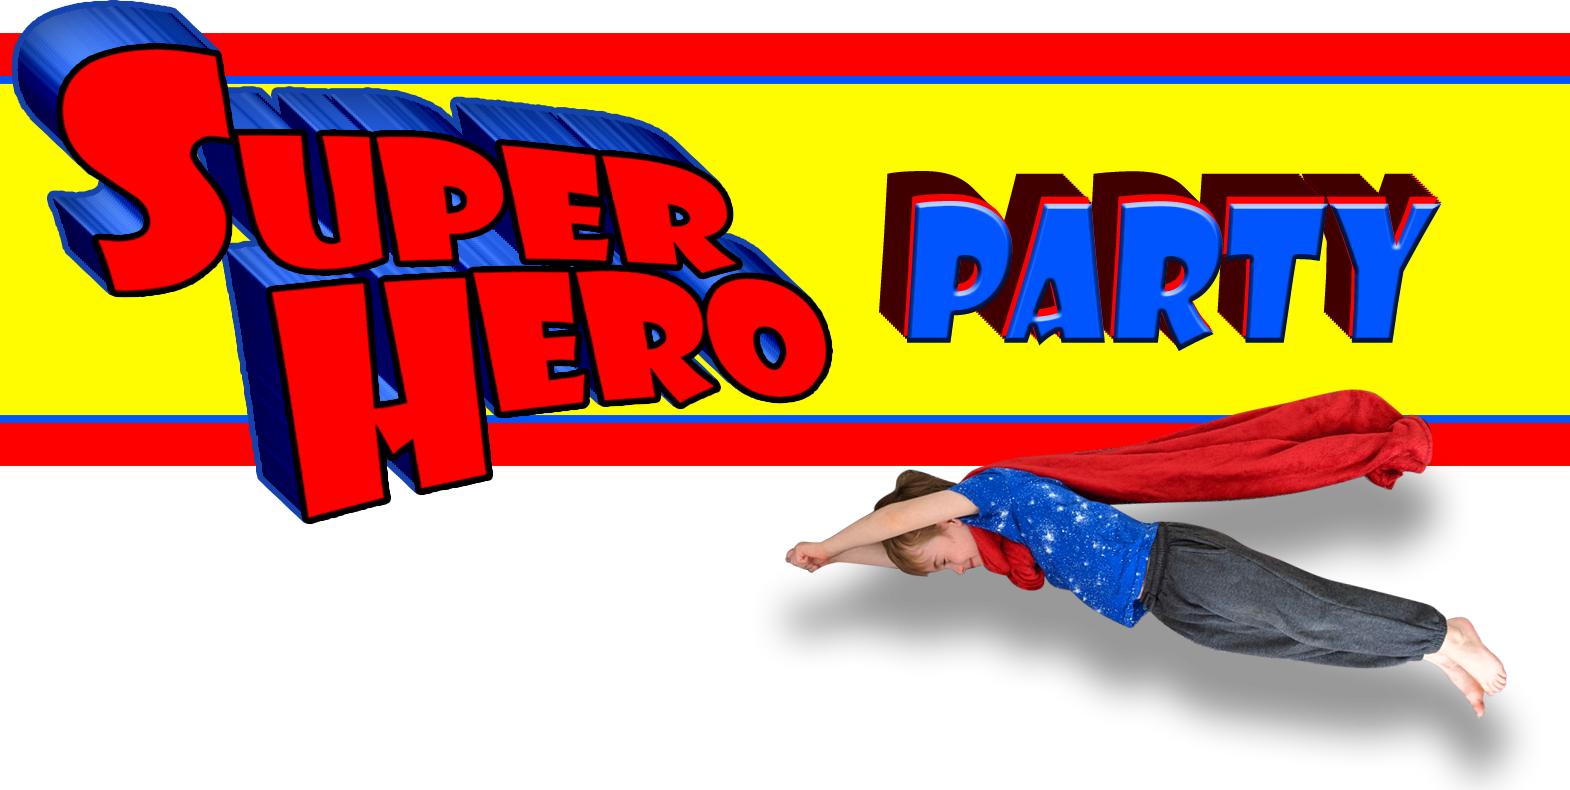 Super hero Party 1